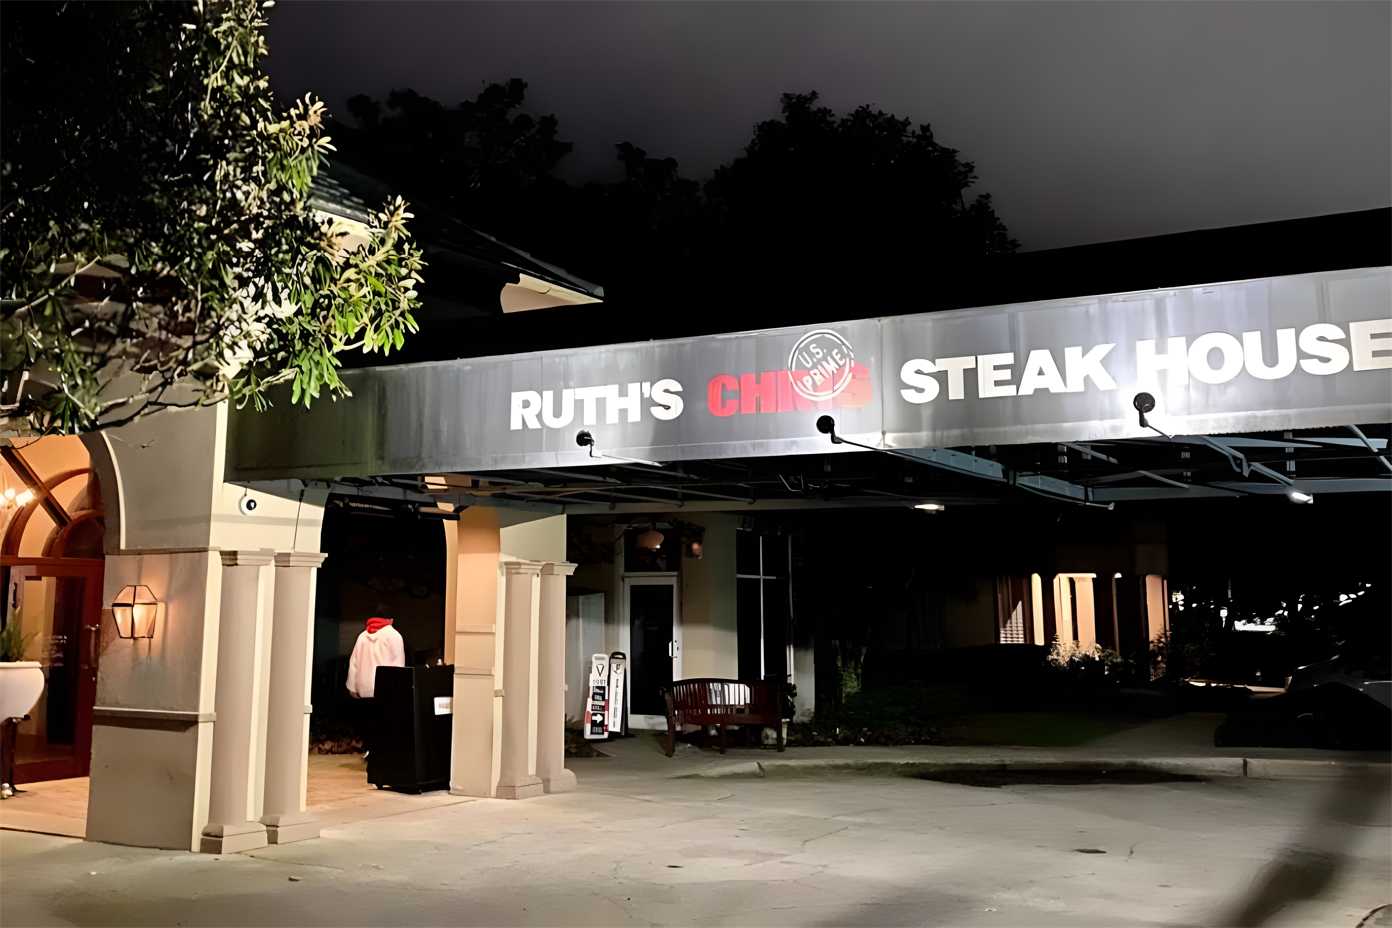 Ruth's Chris Steak House Best Restaurants in Destin, FL